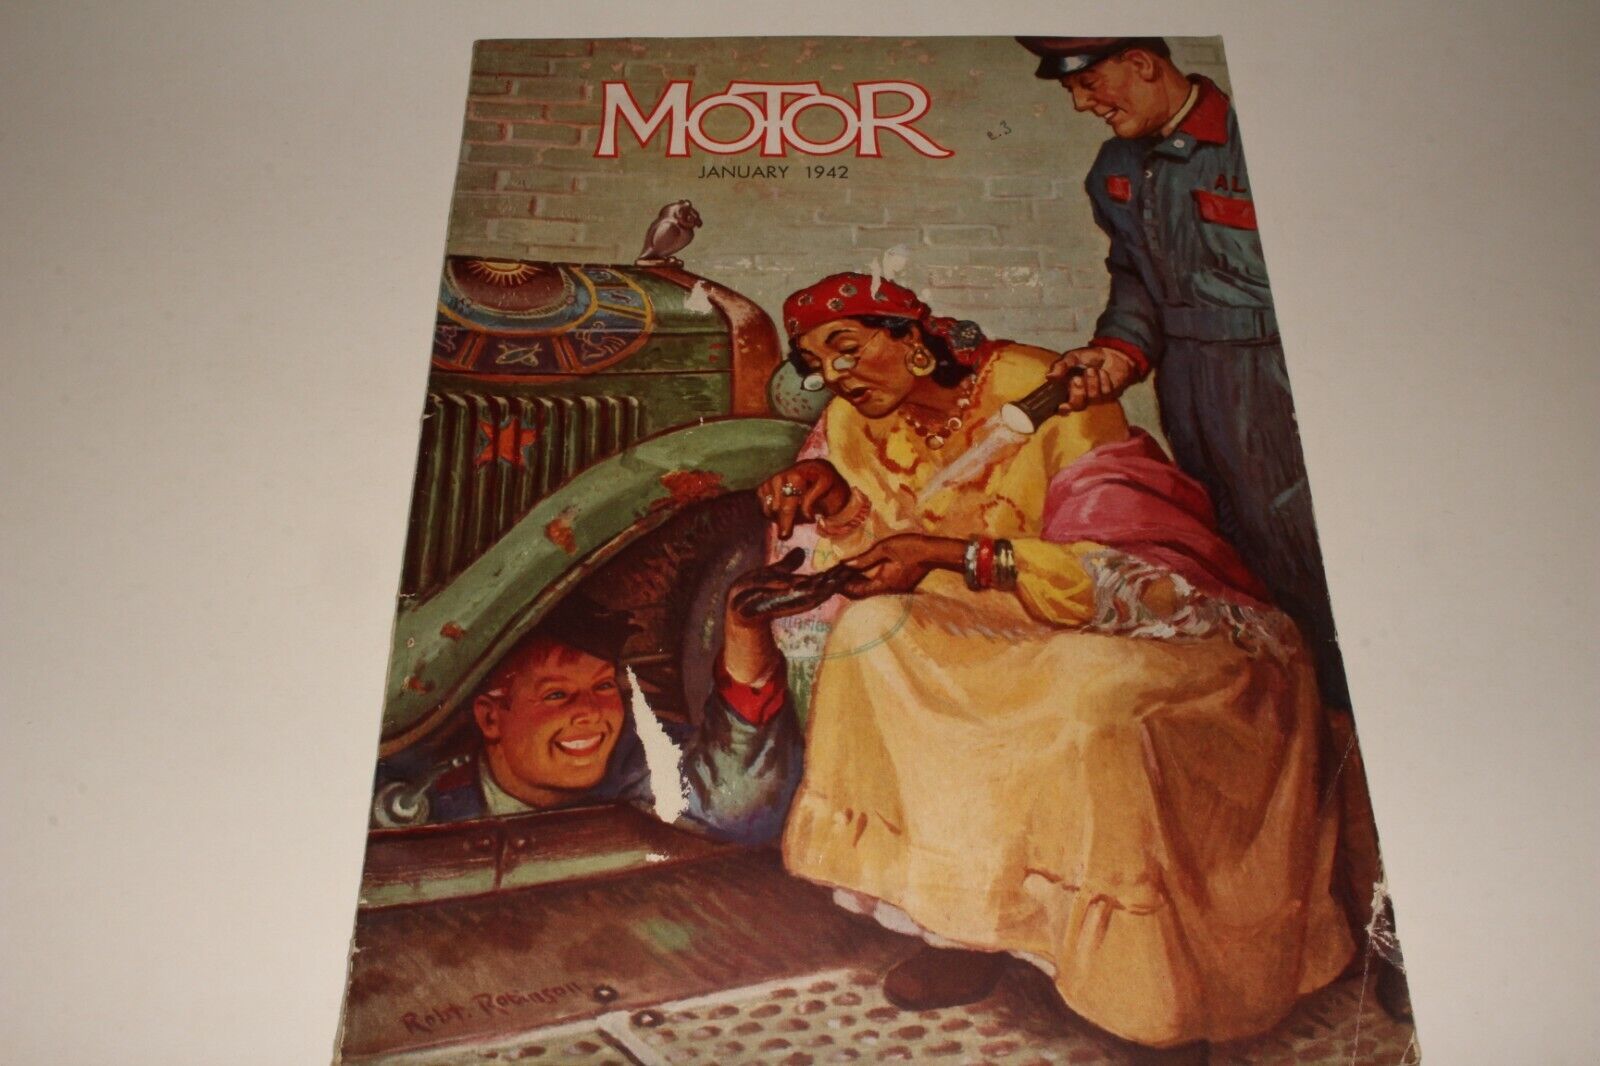 MOTOR MAGAZINE JANUARY 1942 ROBERT ROBINSON COVER ART